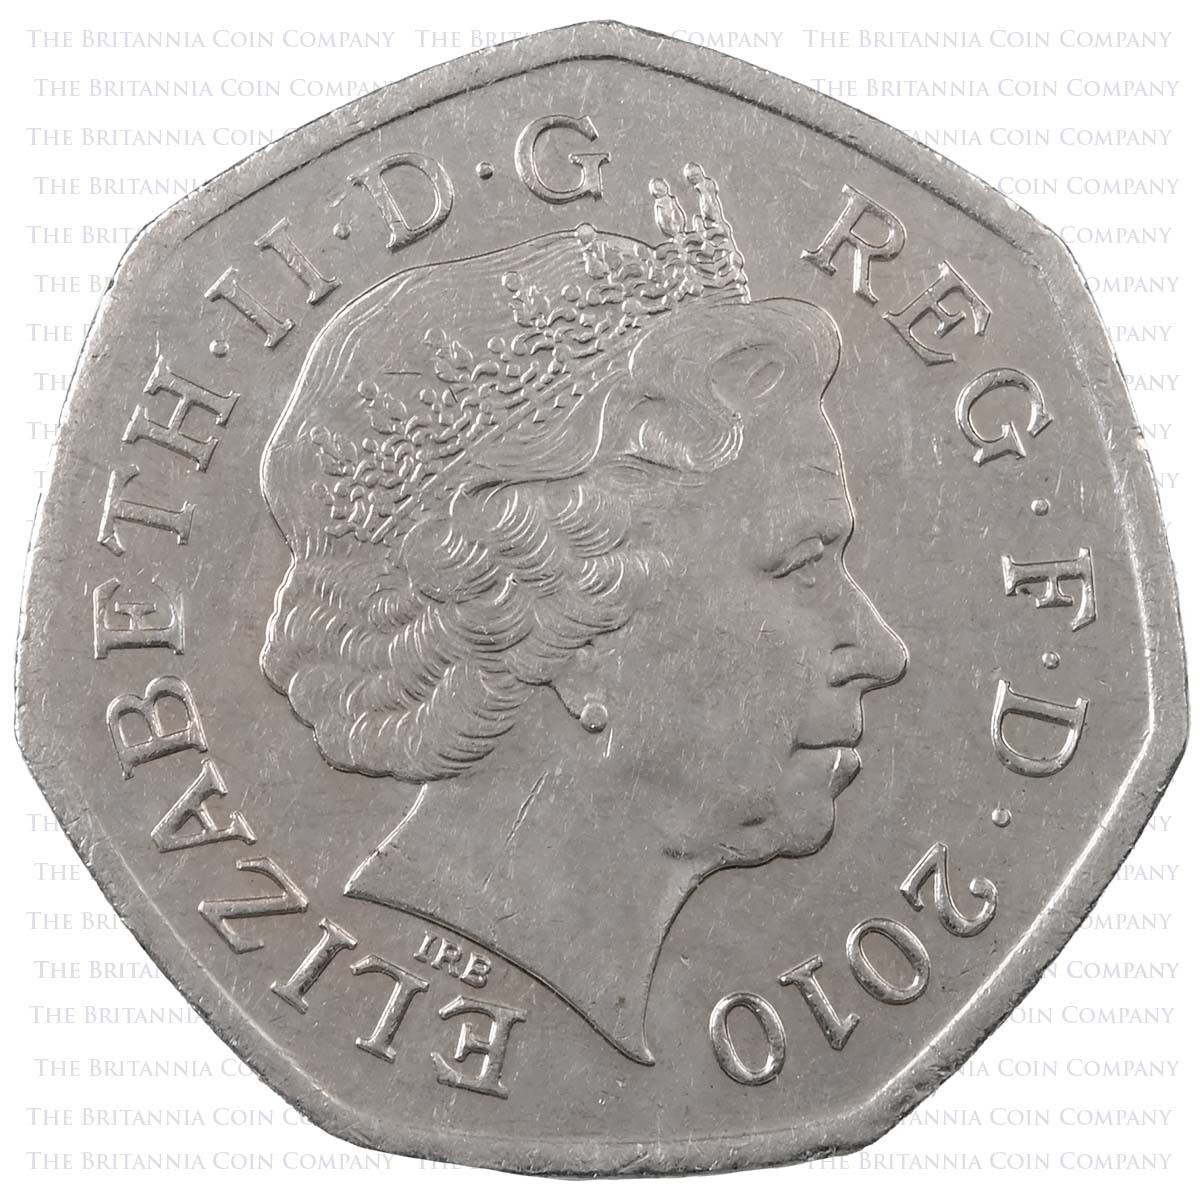 2010 Girl Guiding Circulated Fifty Pence Coin Obverse